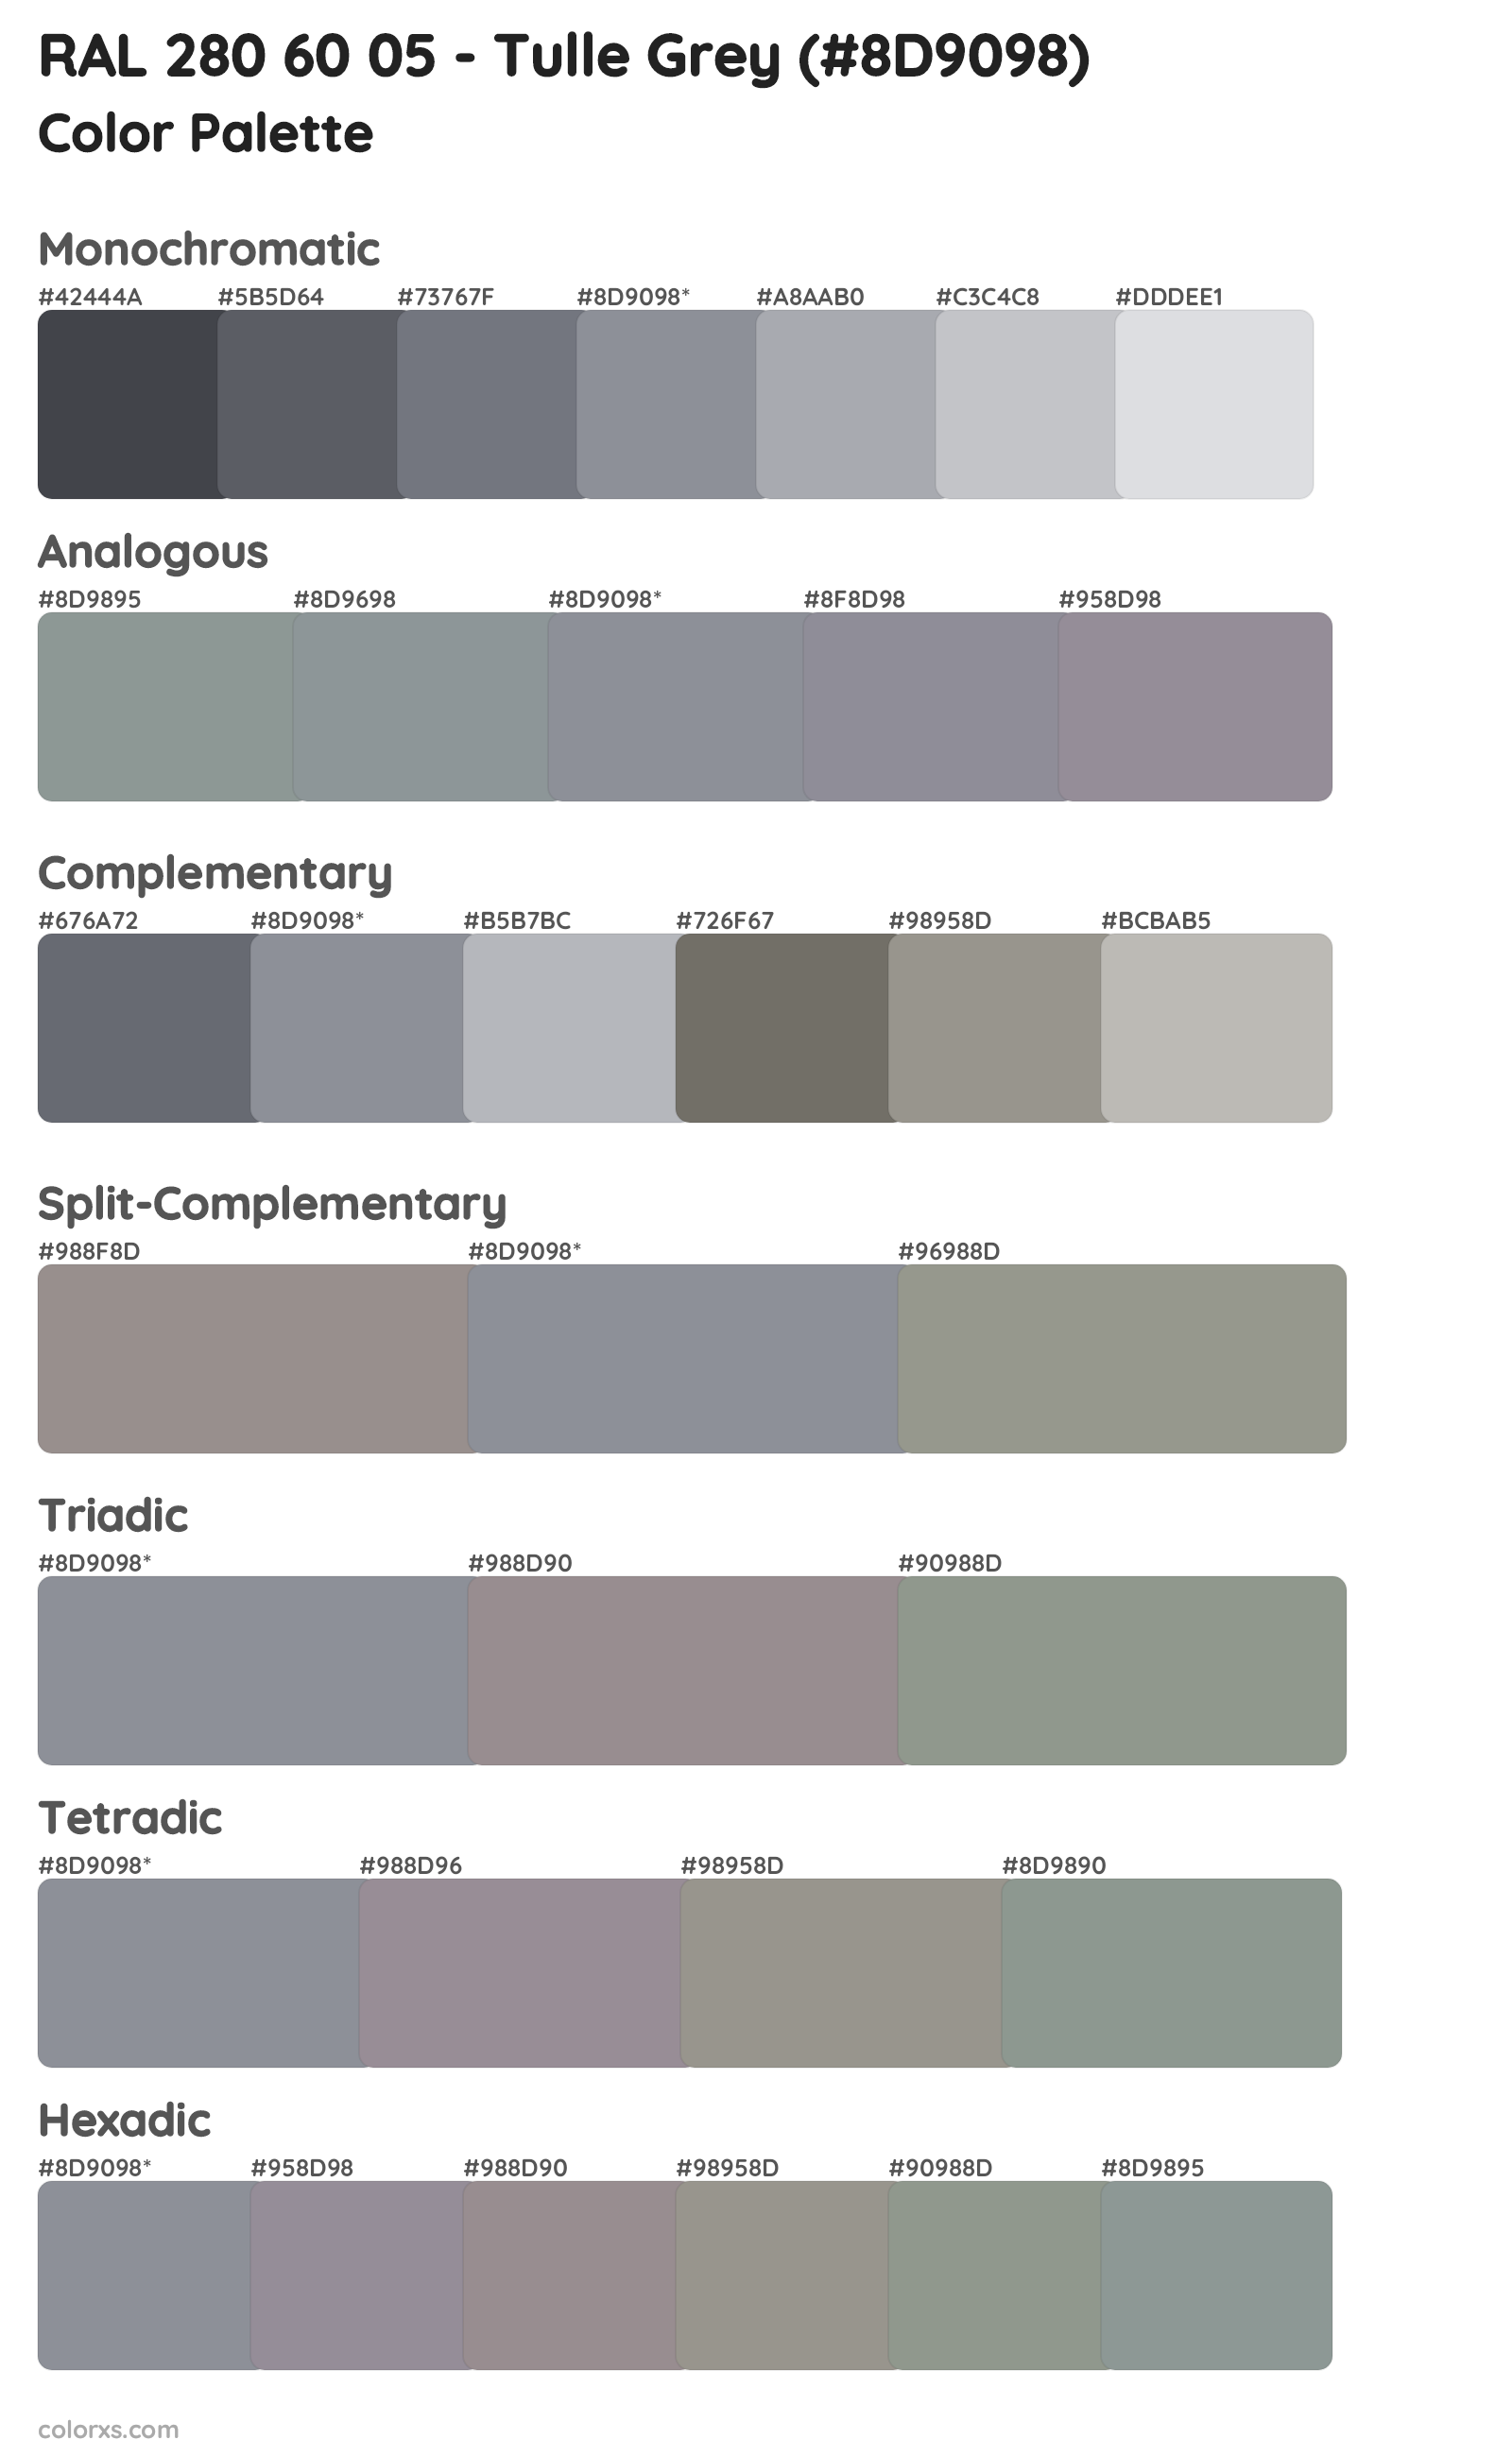 RAL 280 60 05 - Tulle Grey Color Scheme Palettes